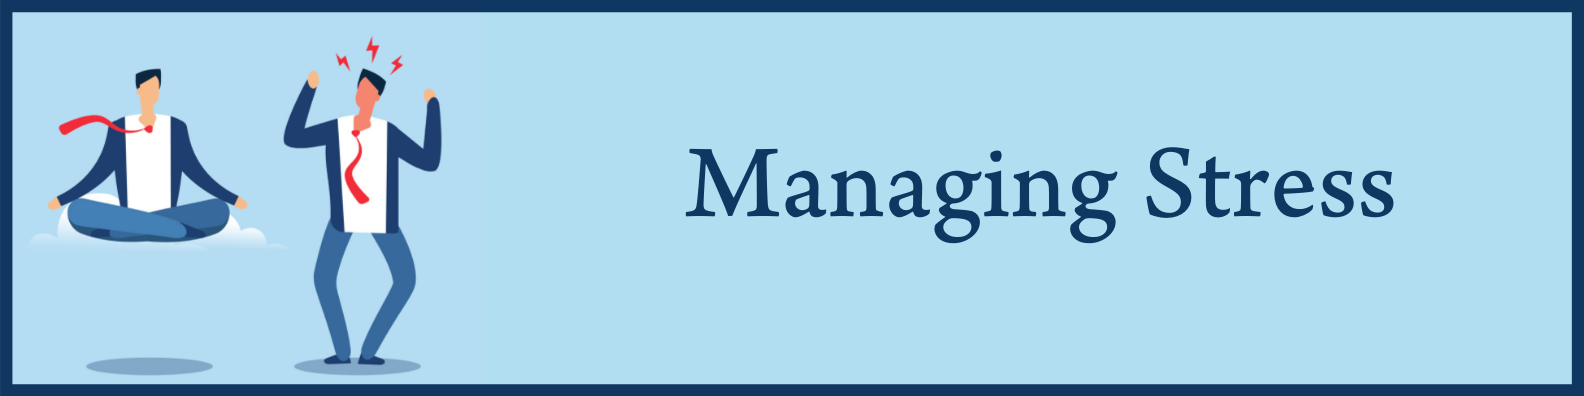 Managing Stress Banner